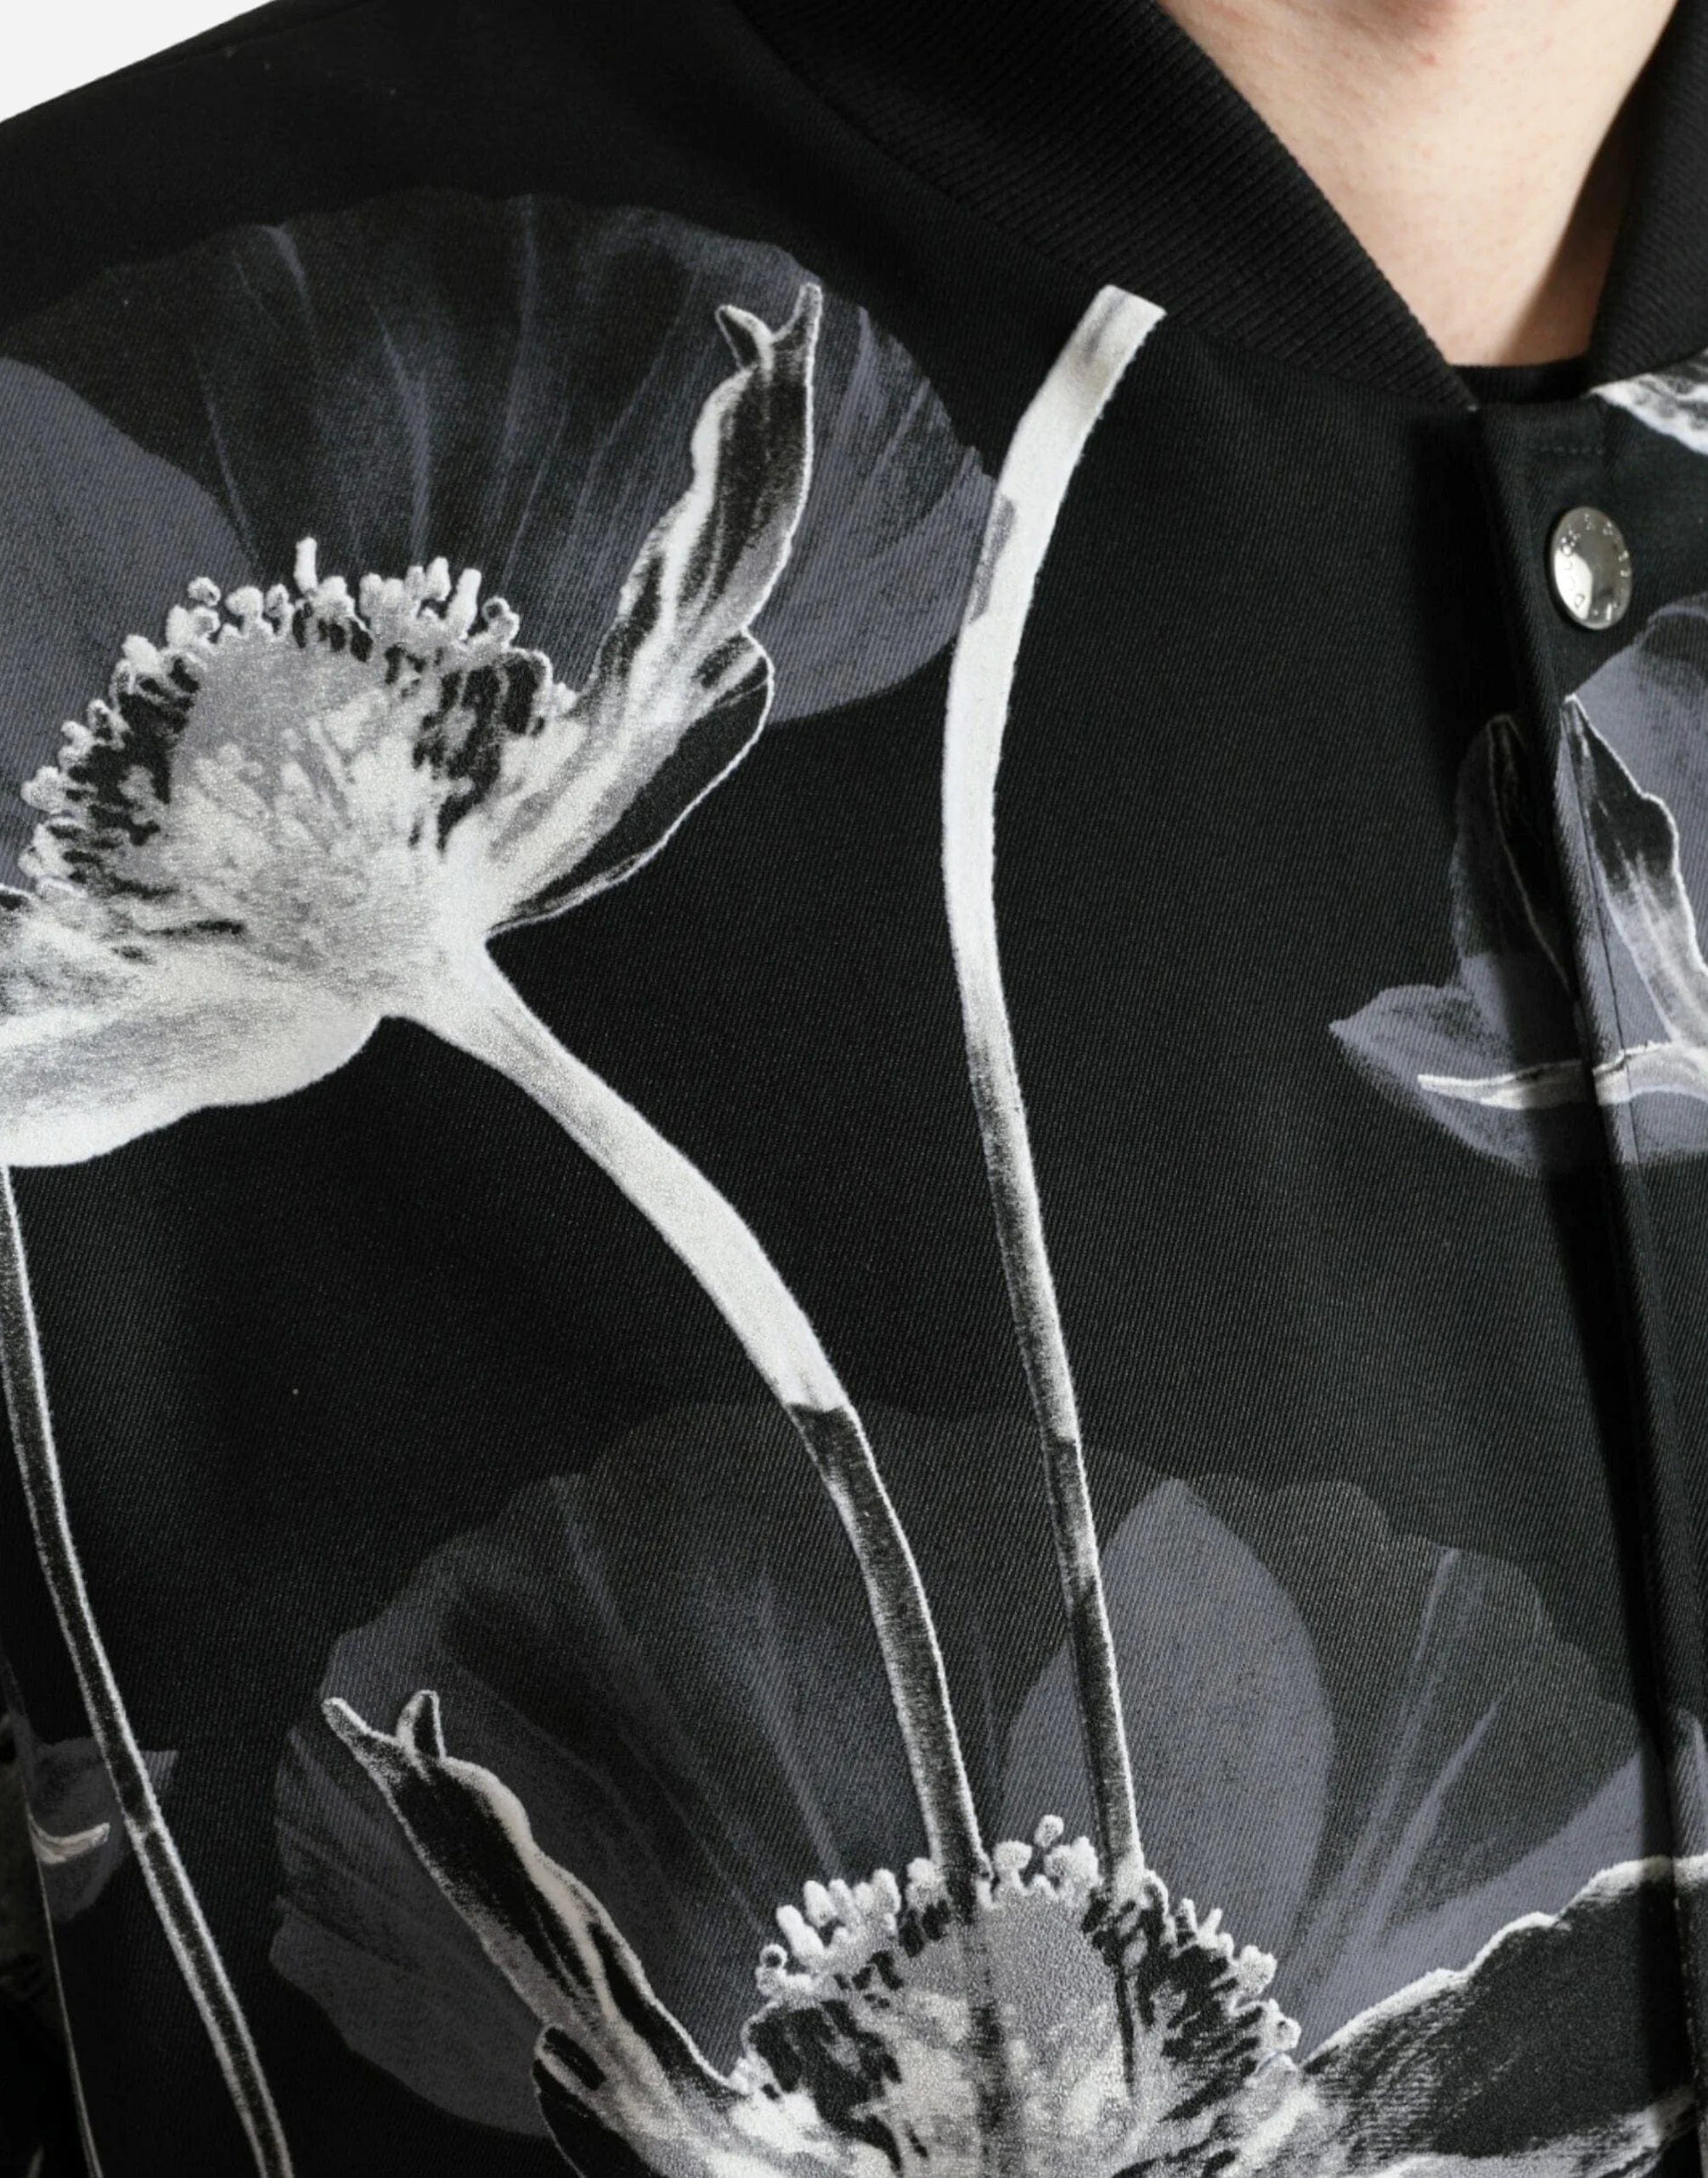 Dolce & Gabbana Floral Print Bomber Jacket